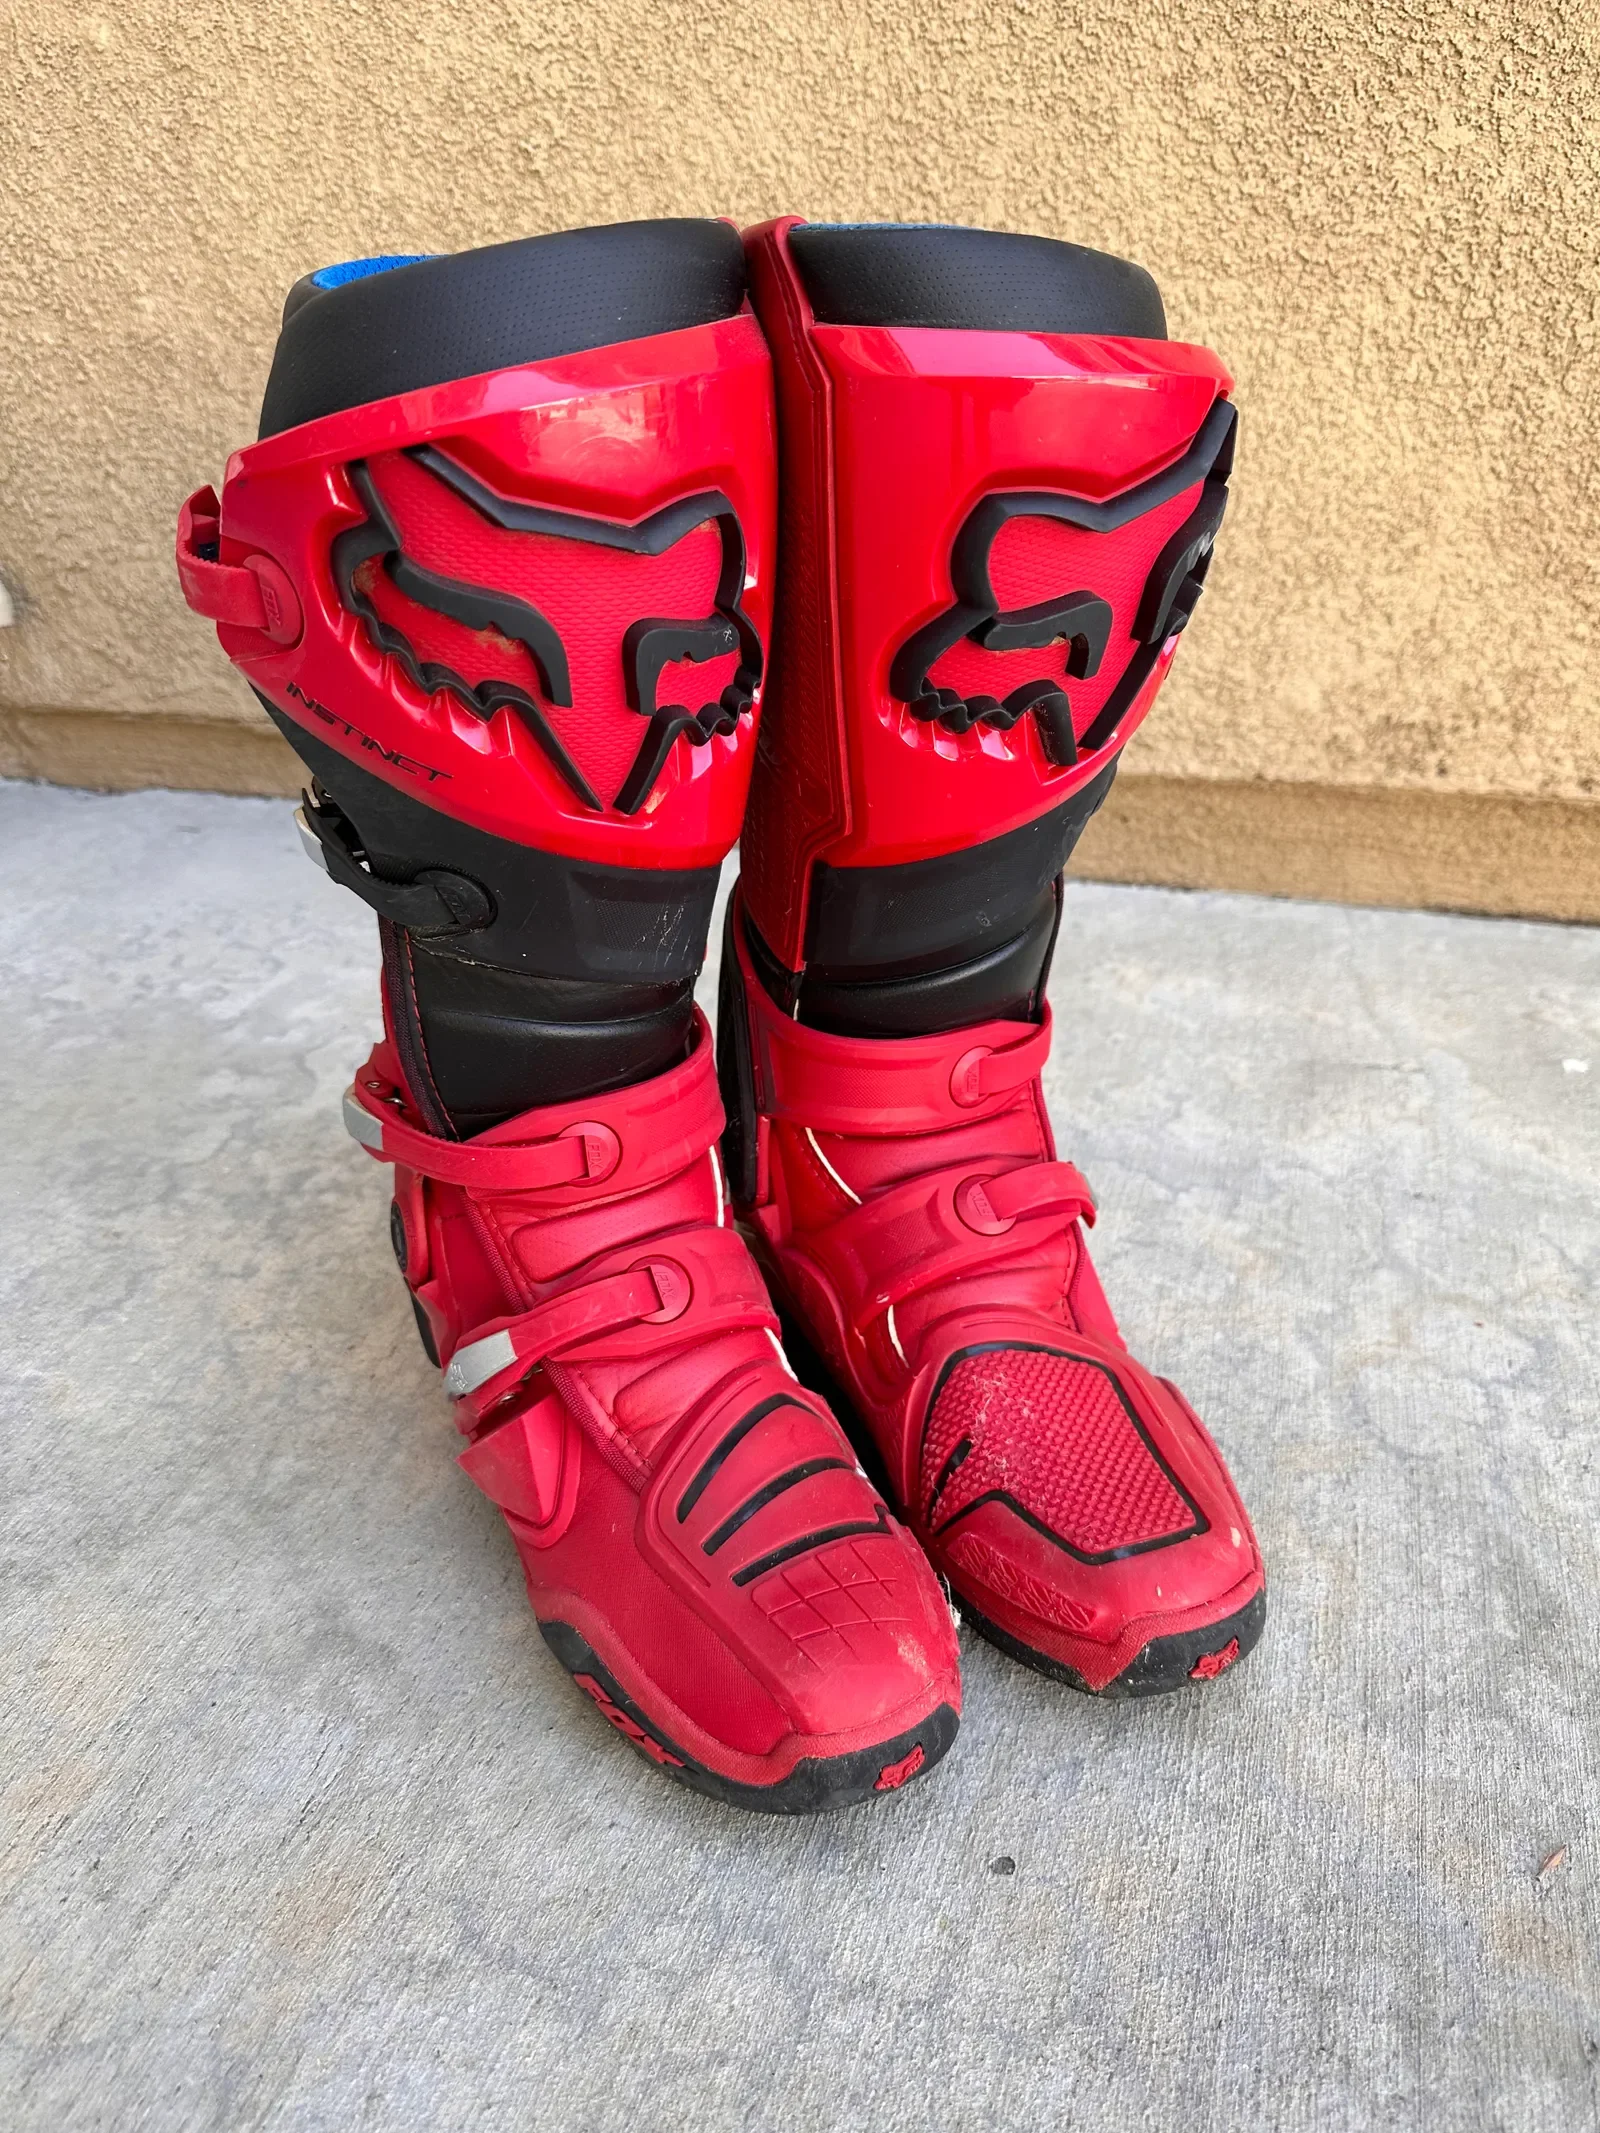 Fox Instinct boots - Size 10 - Blk/red